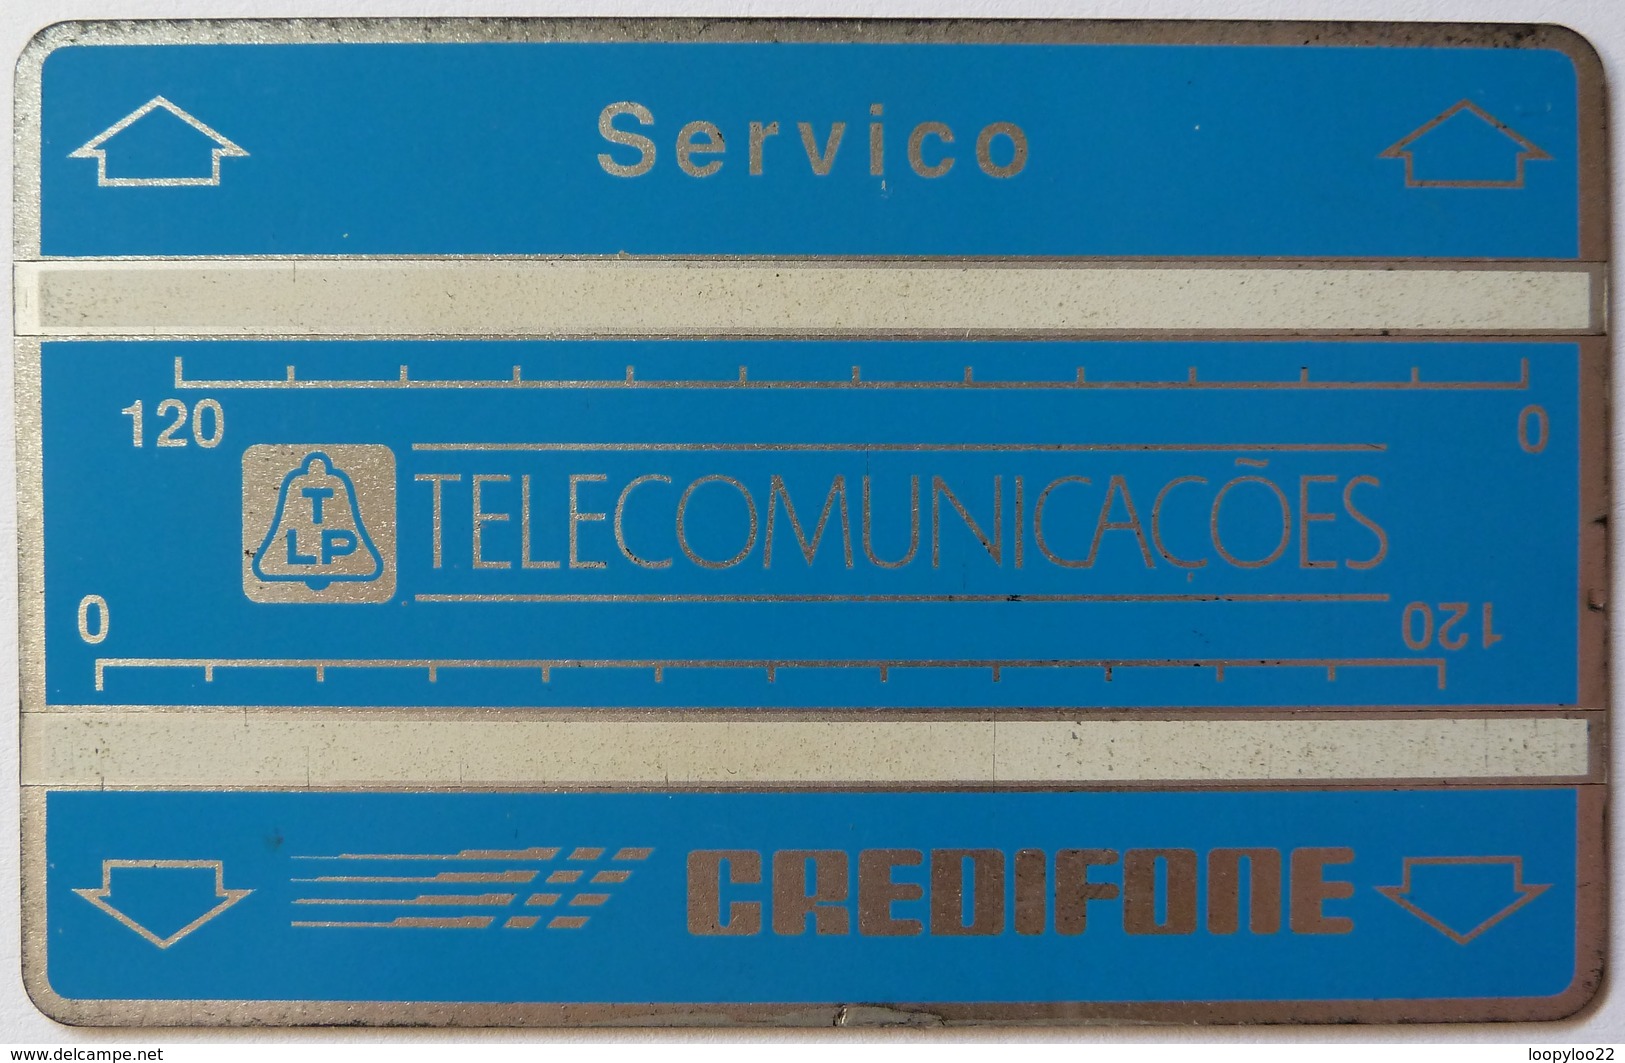 PORTUGAL - L&G - Landis & Gyr - Service - TLP - 804S - 240 Units - Credifone - 2400ex - Used - Portugal